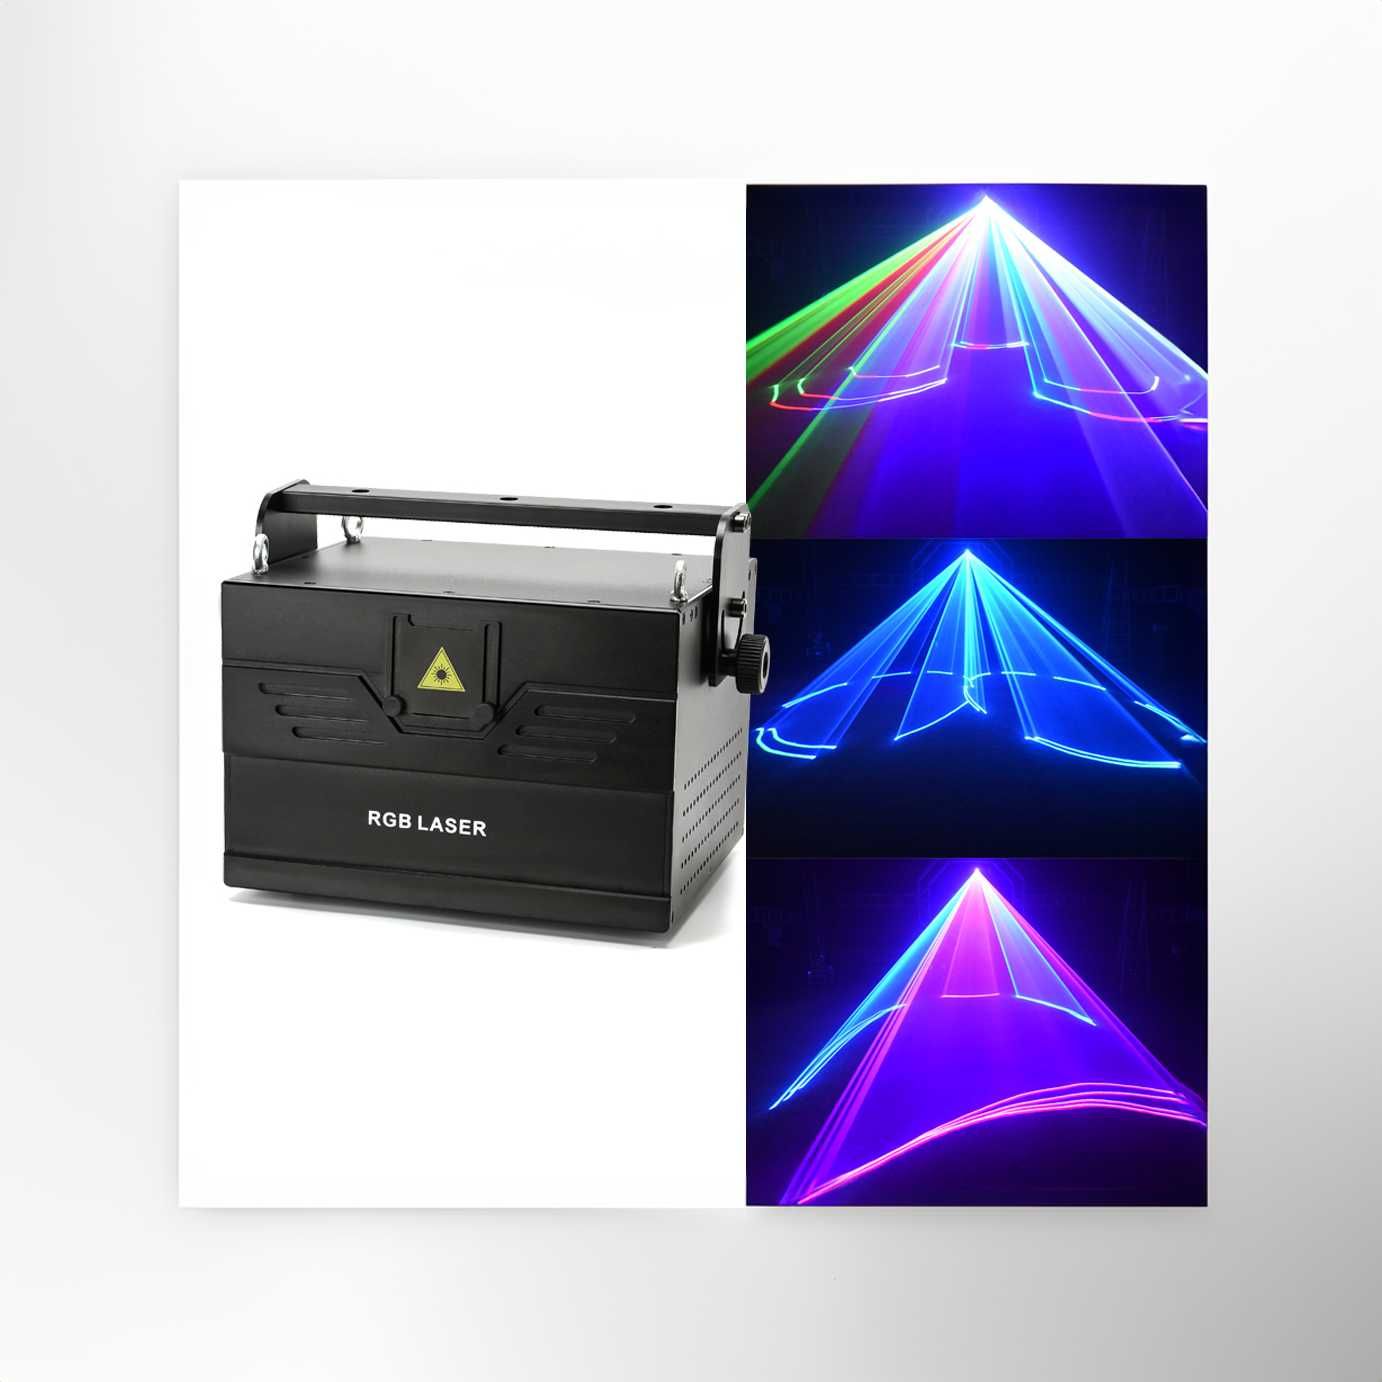 NOWY - Profesjonalny Laser RGB Ogromny Laser 3W